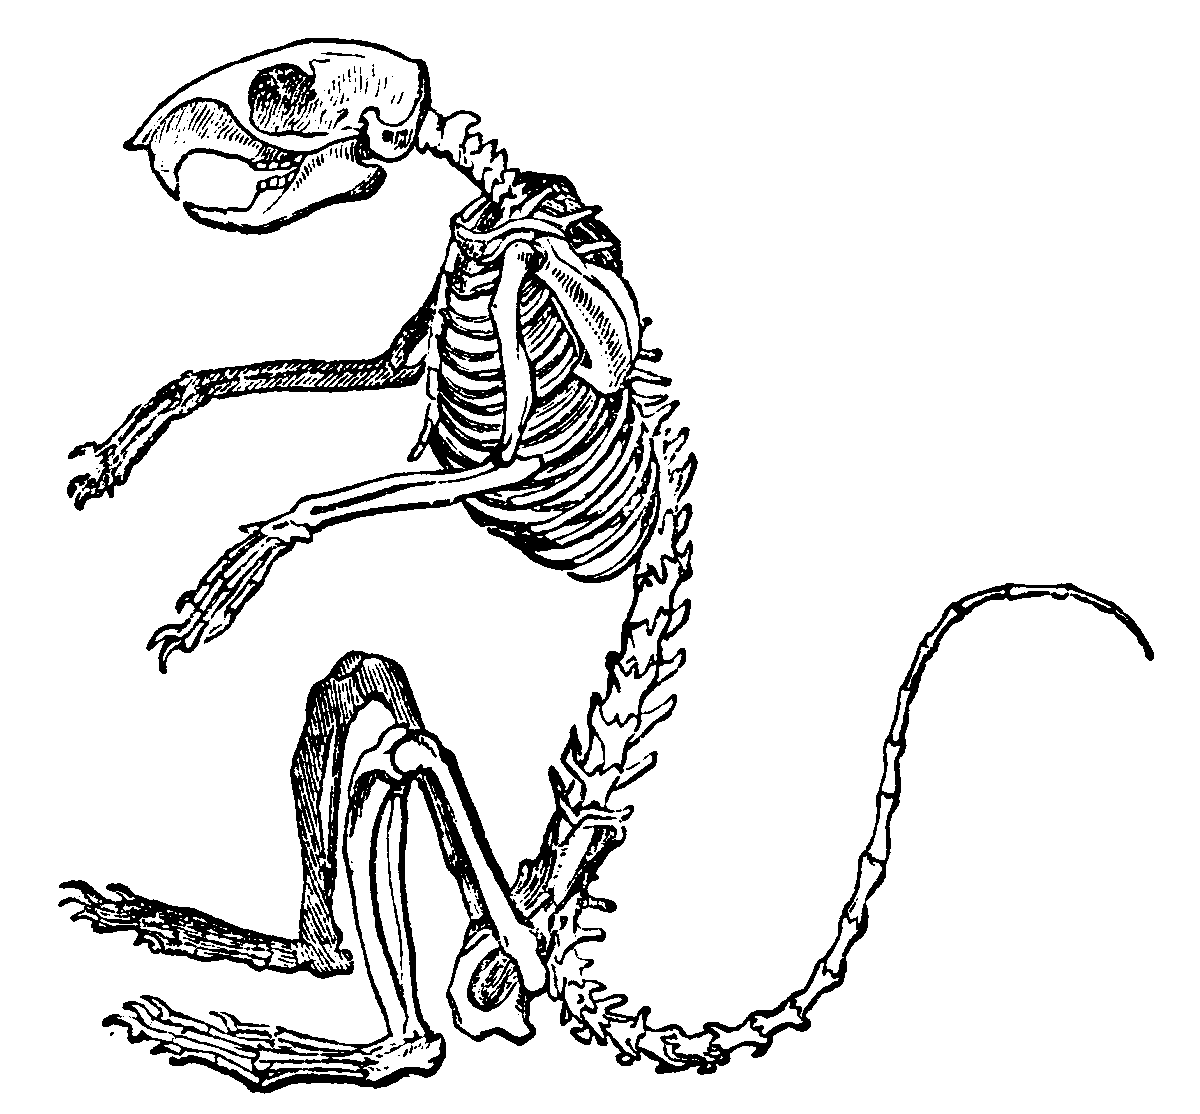 Squirrel skeleton